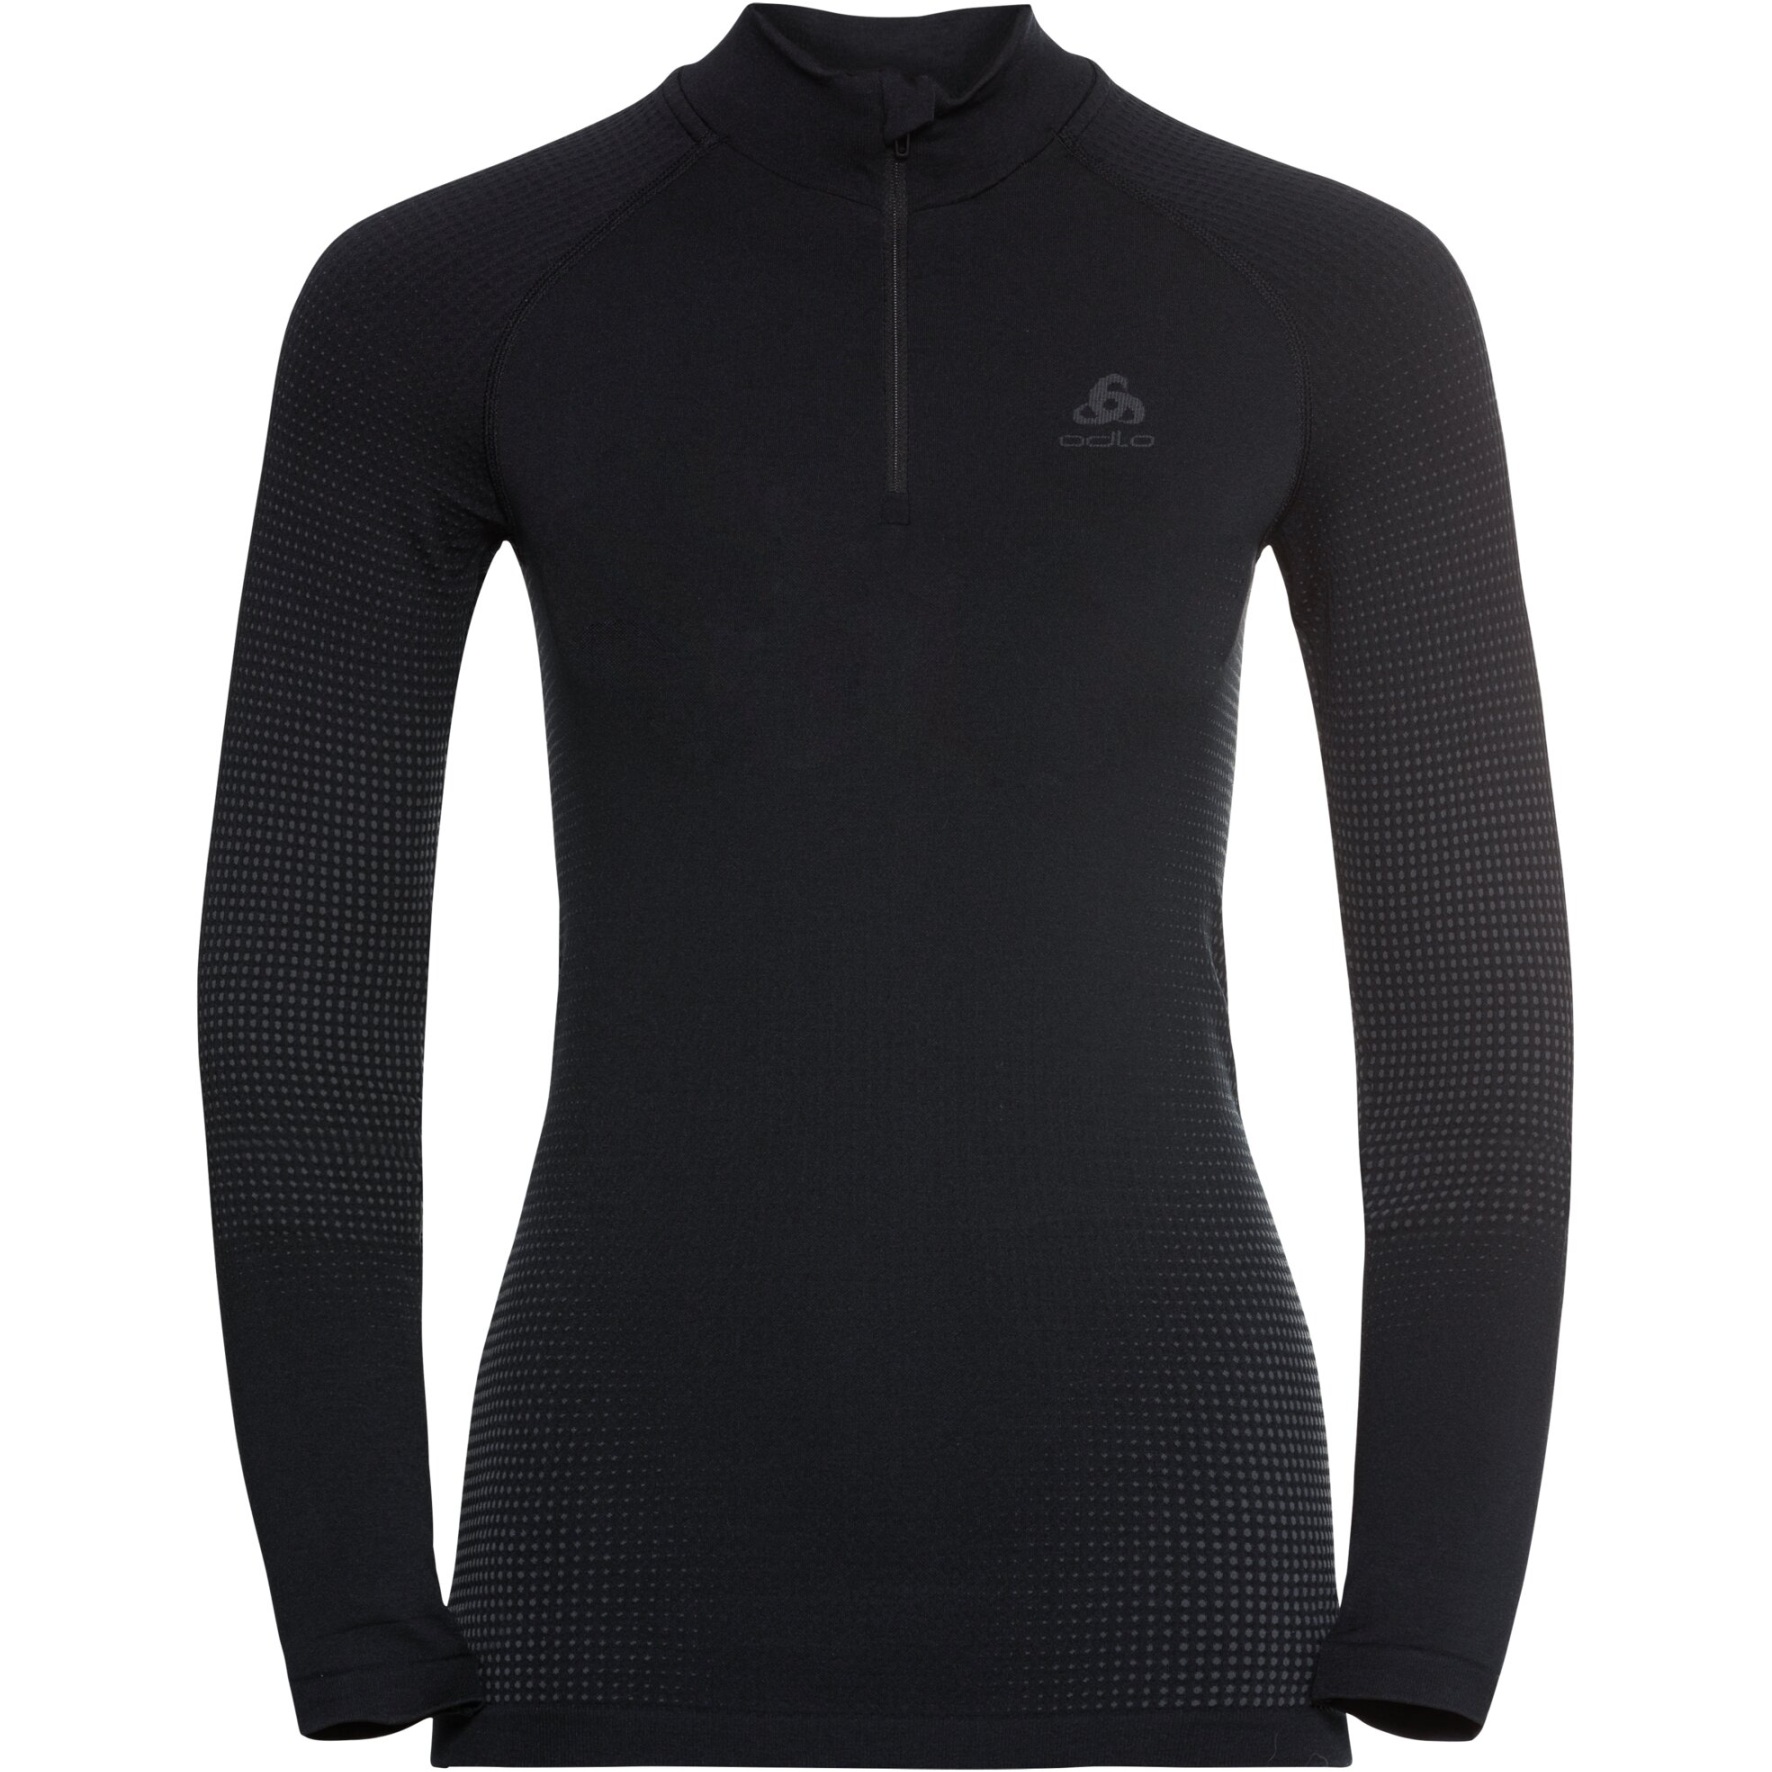 Produktbild von Odlo Performance Warm Half-Zip Turtleneck Langarm-Unterhemd Damen - schwarz - new odlo graphite grey